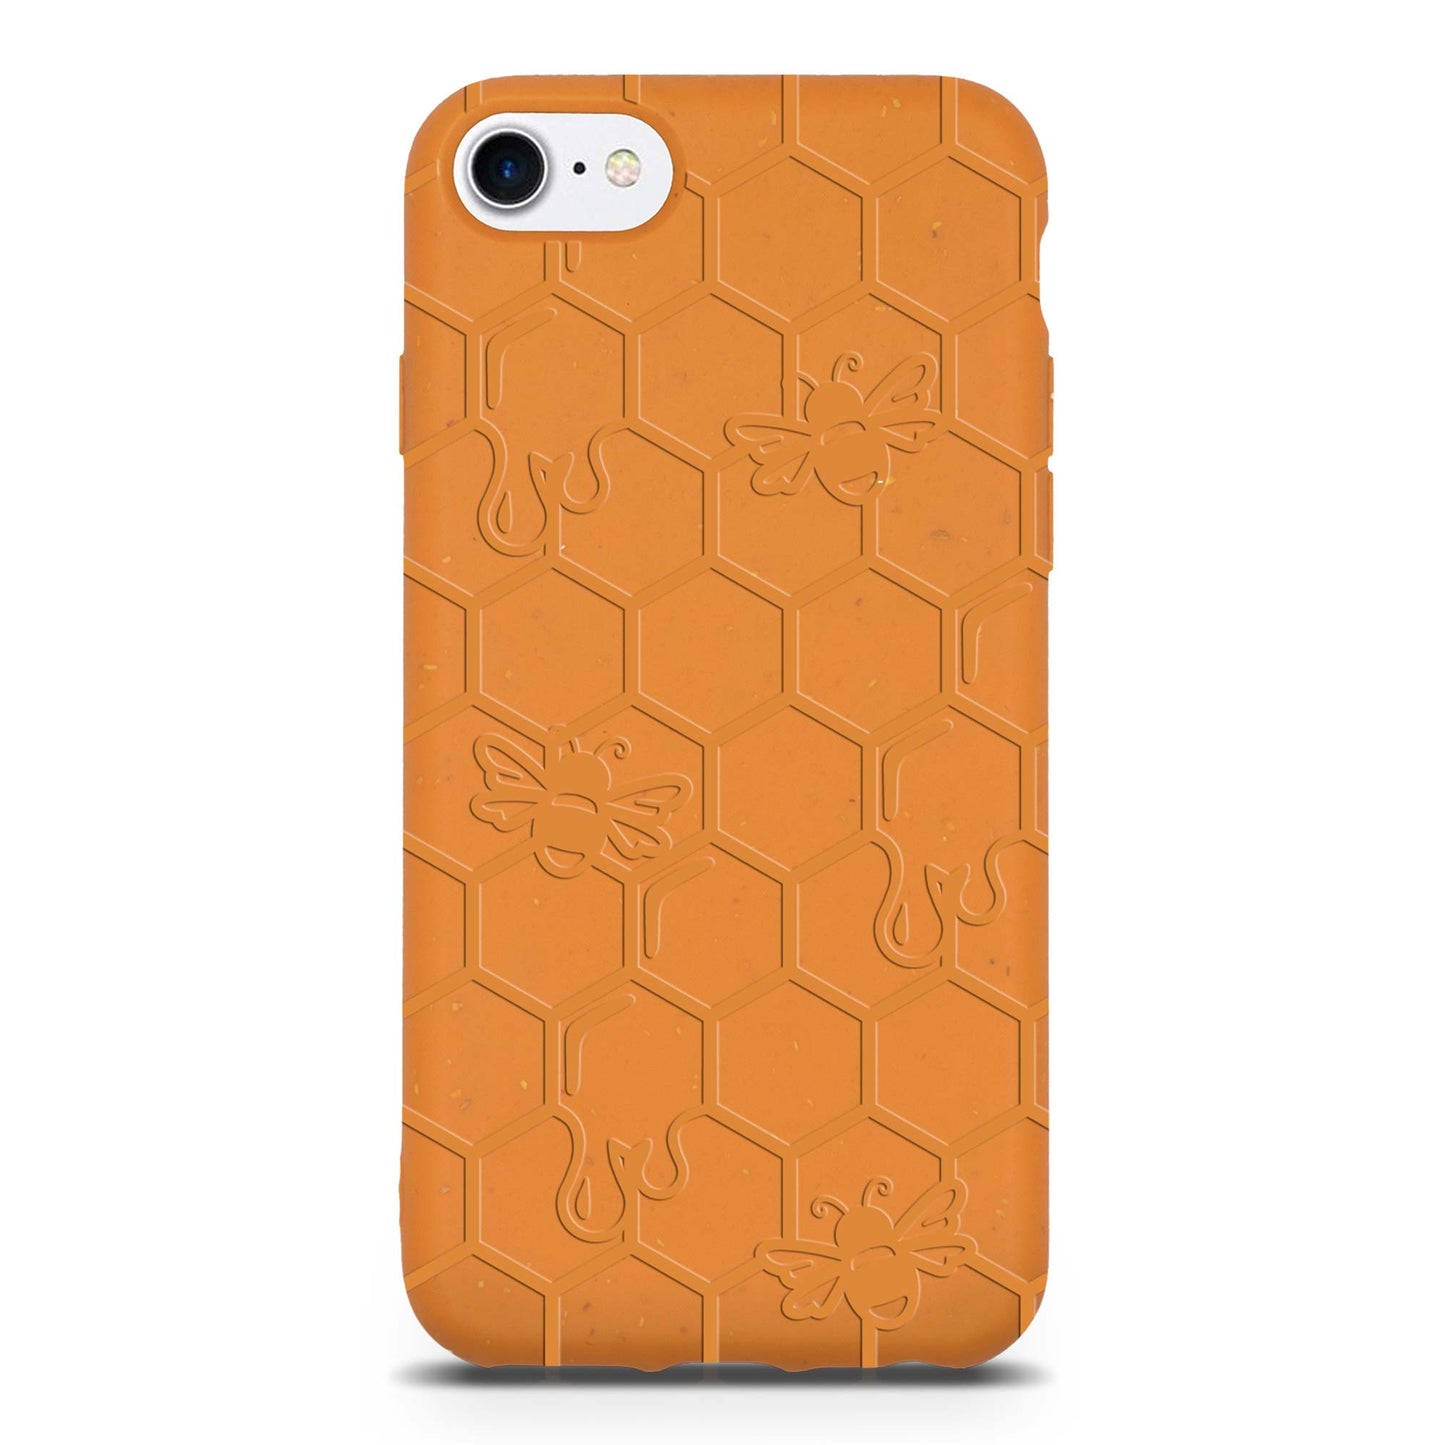 Honey Bee -  Biodegradable Phone Case - Yellow, Orange and Black - MMORE